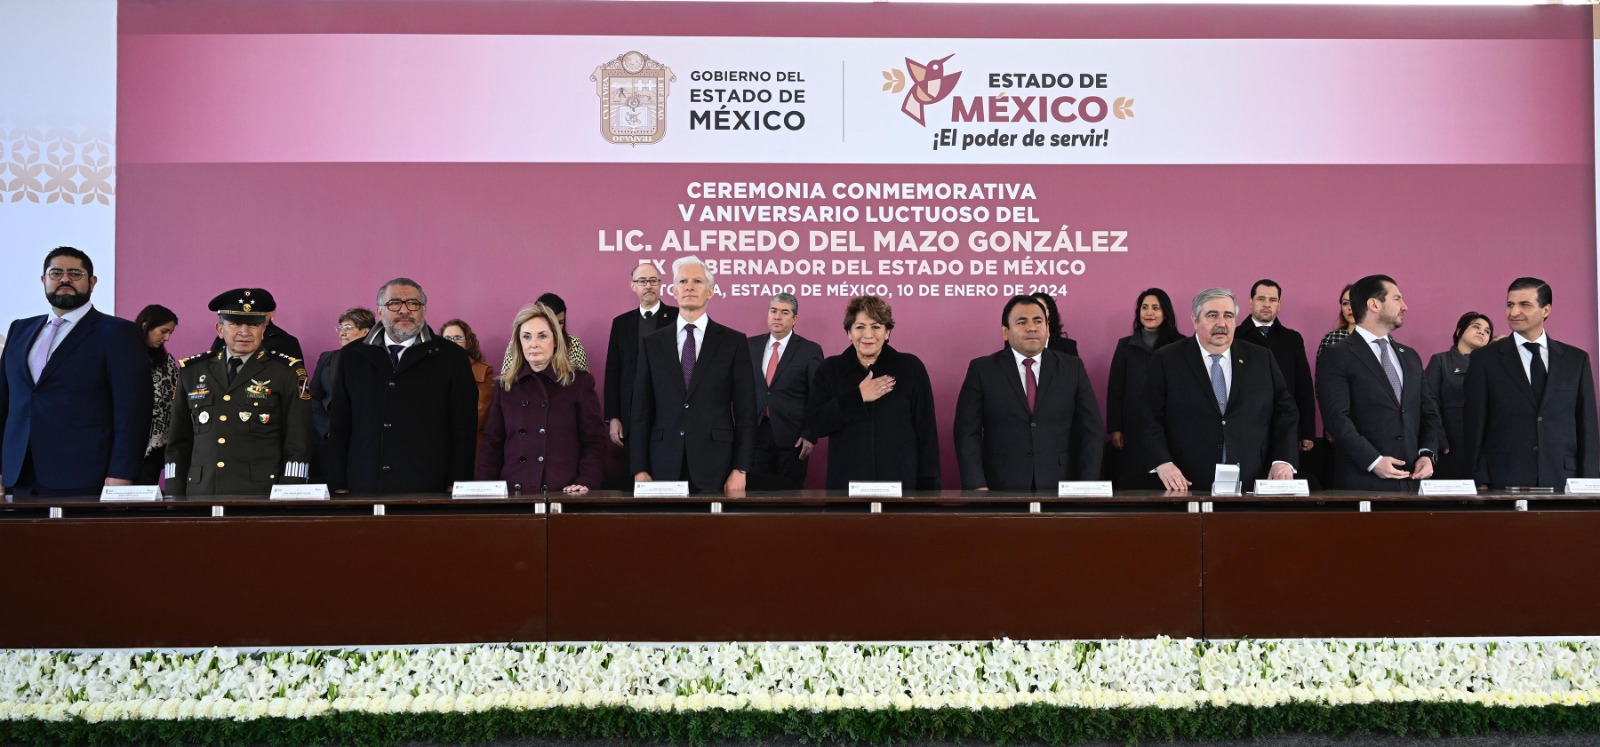 Ceremonia luctuosa del exgobernador Del Mazo González